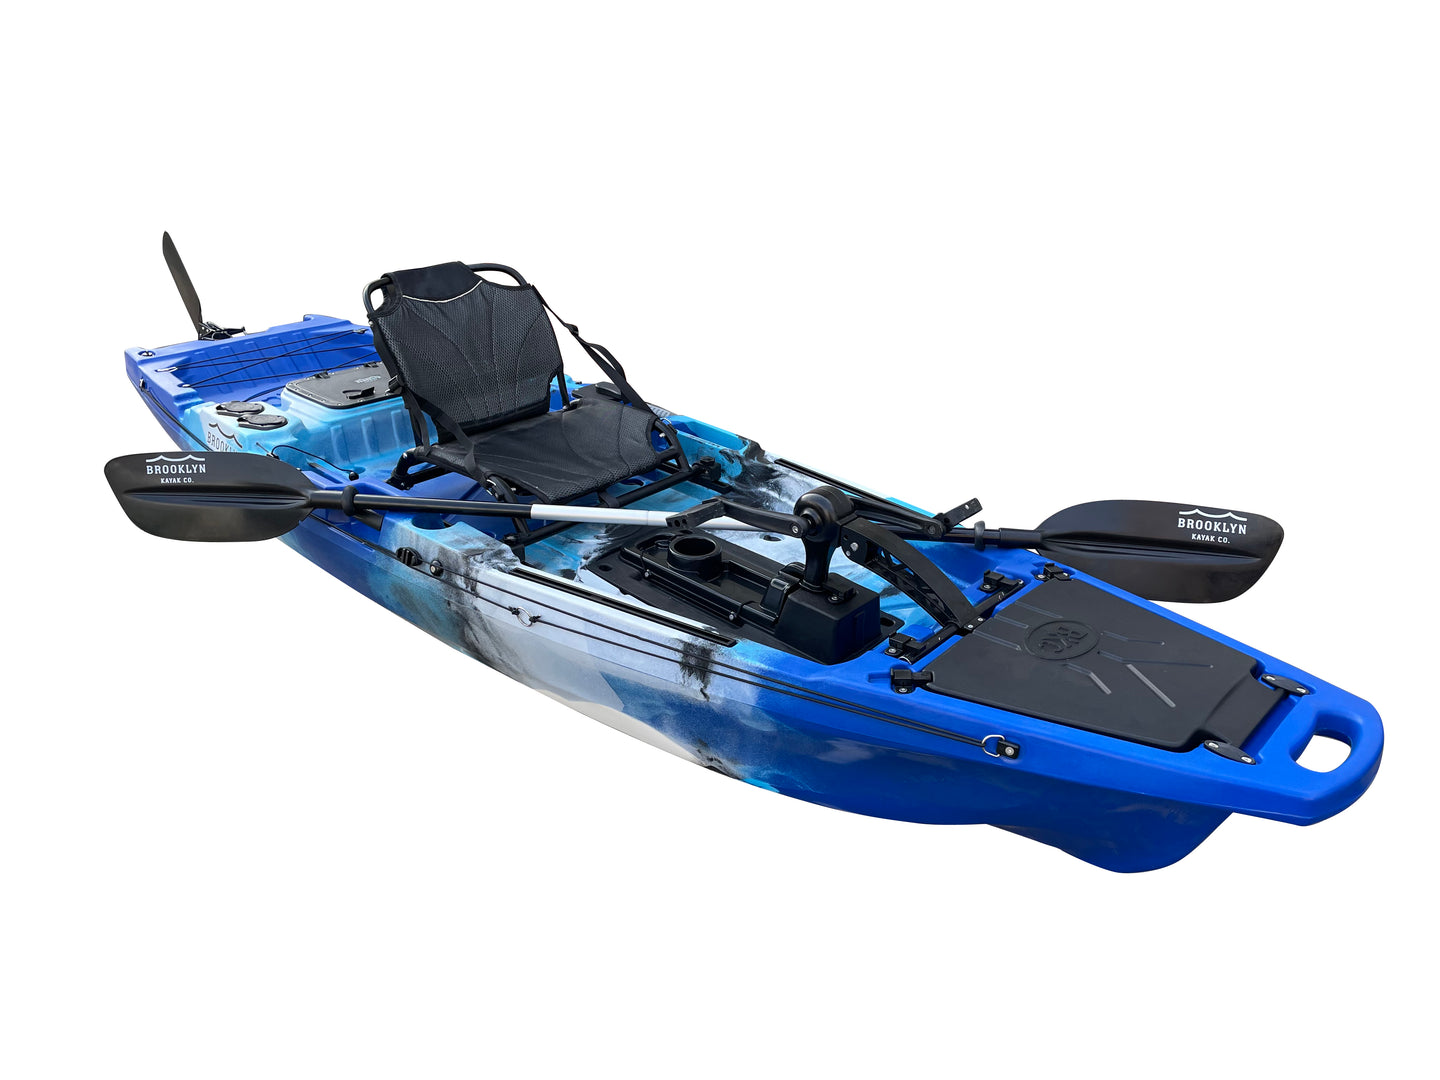 Brooklyn 10.5 Pro Single Pedal Kayak, blue camo - Brooklyn Kayak Company